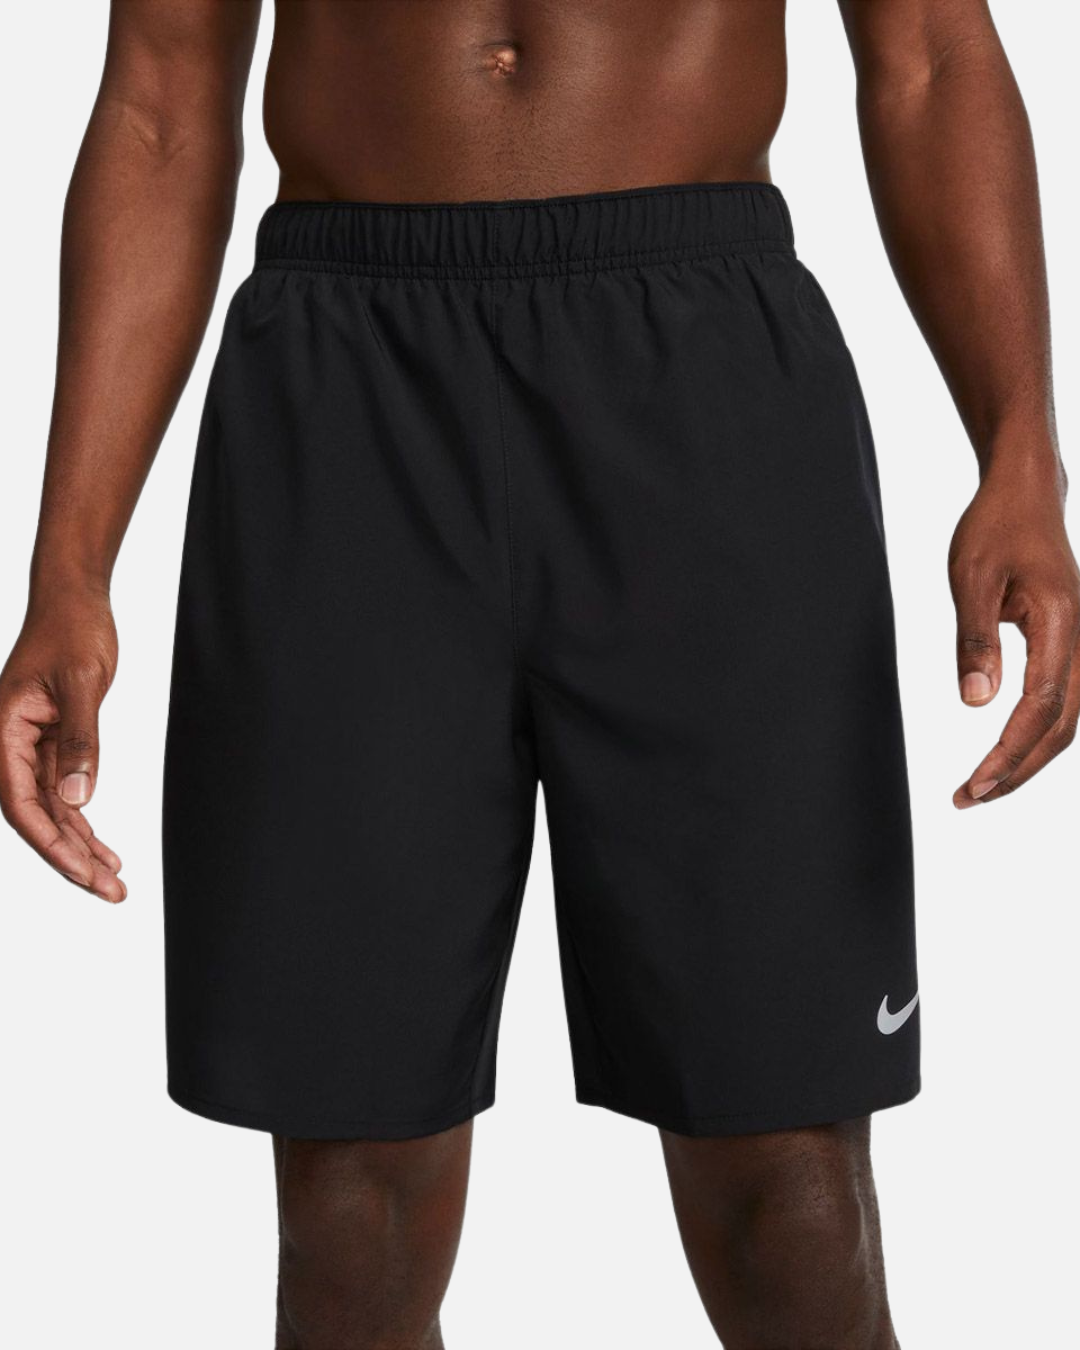 Nike Challenger Shorts - Black